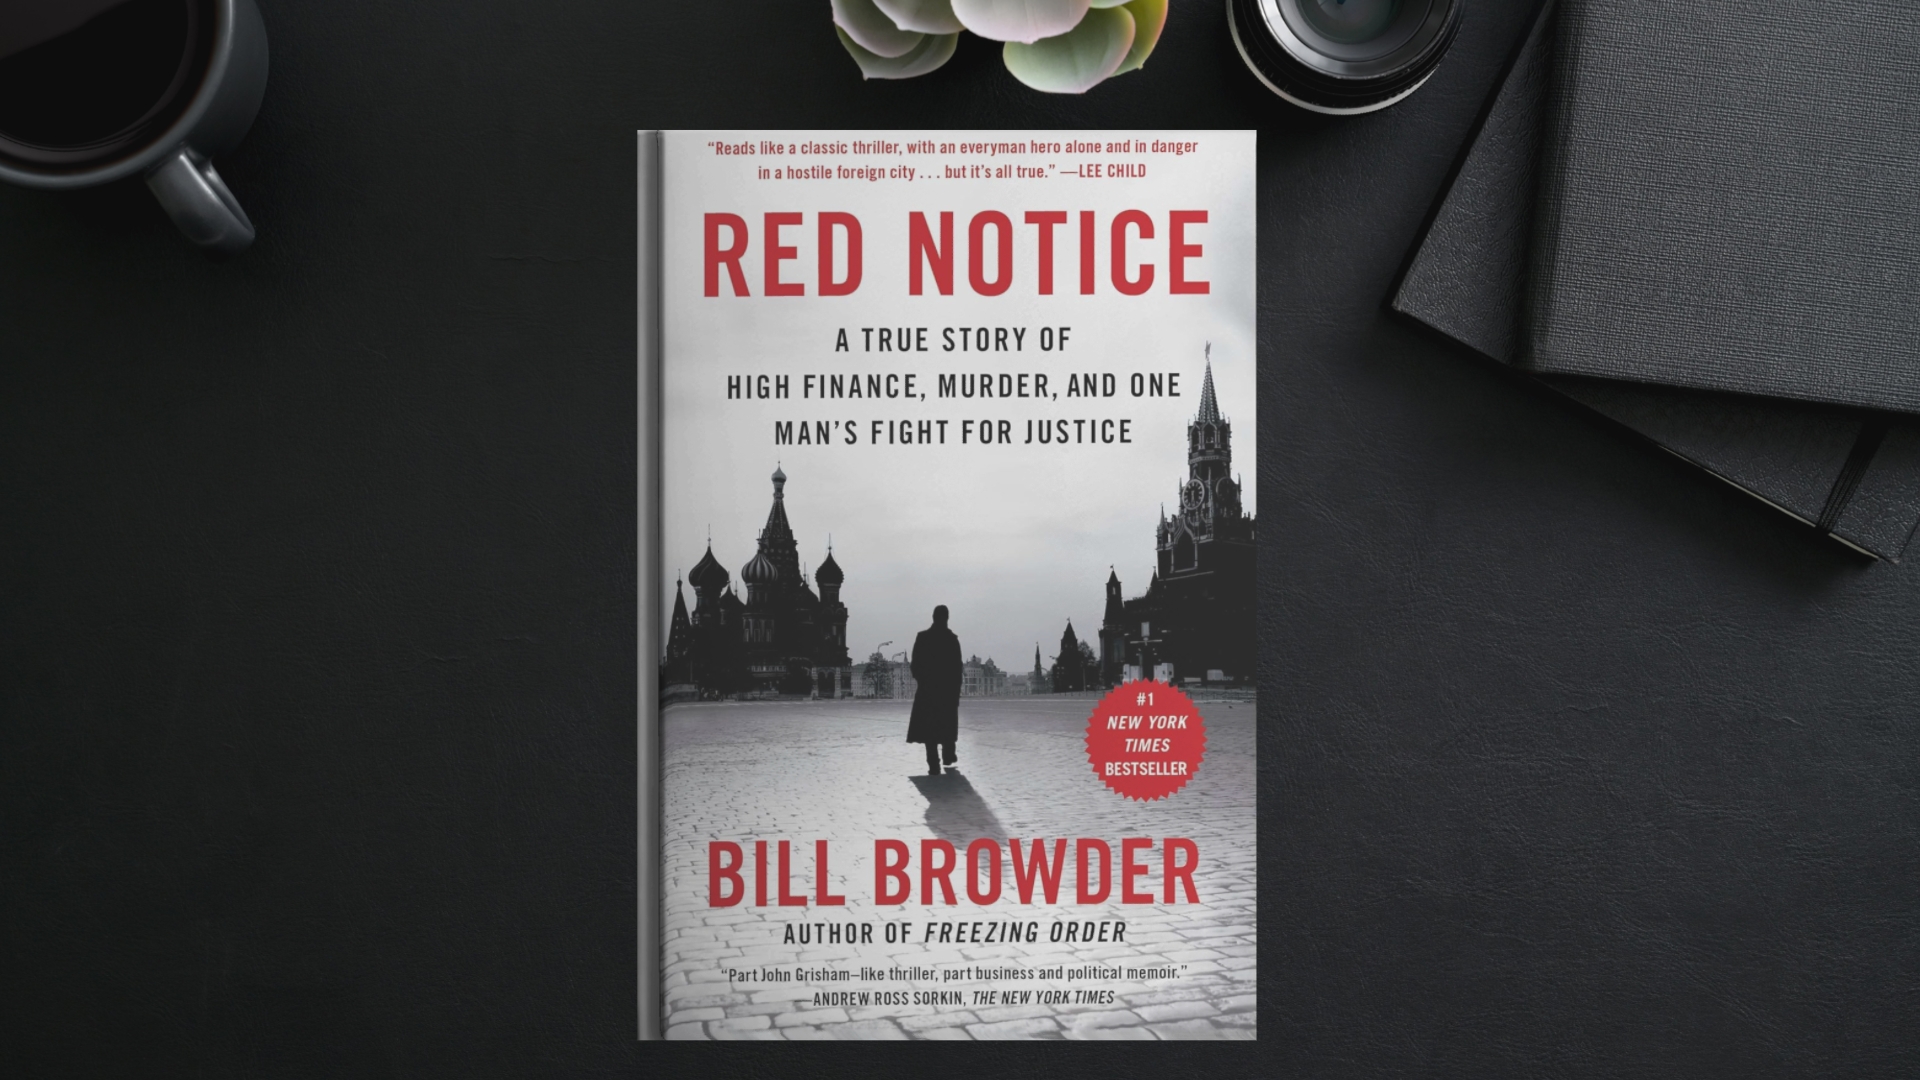 Red notice book